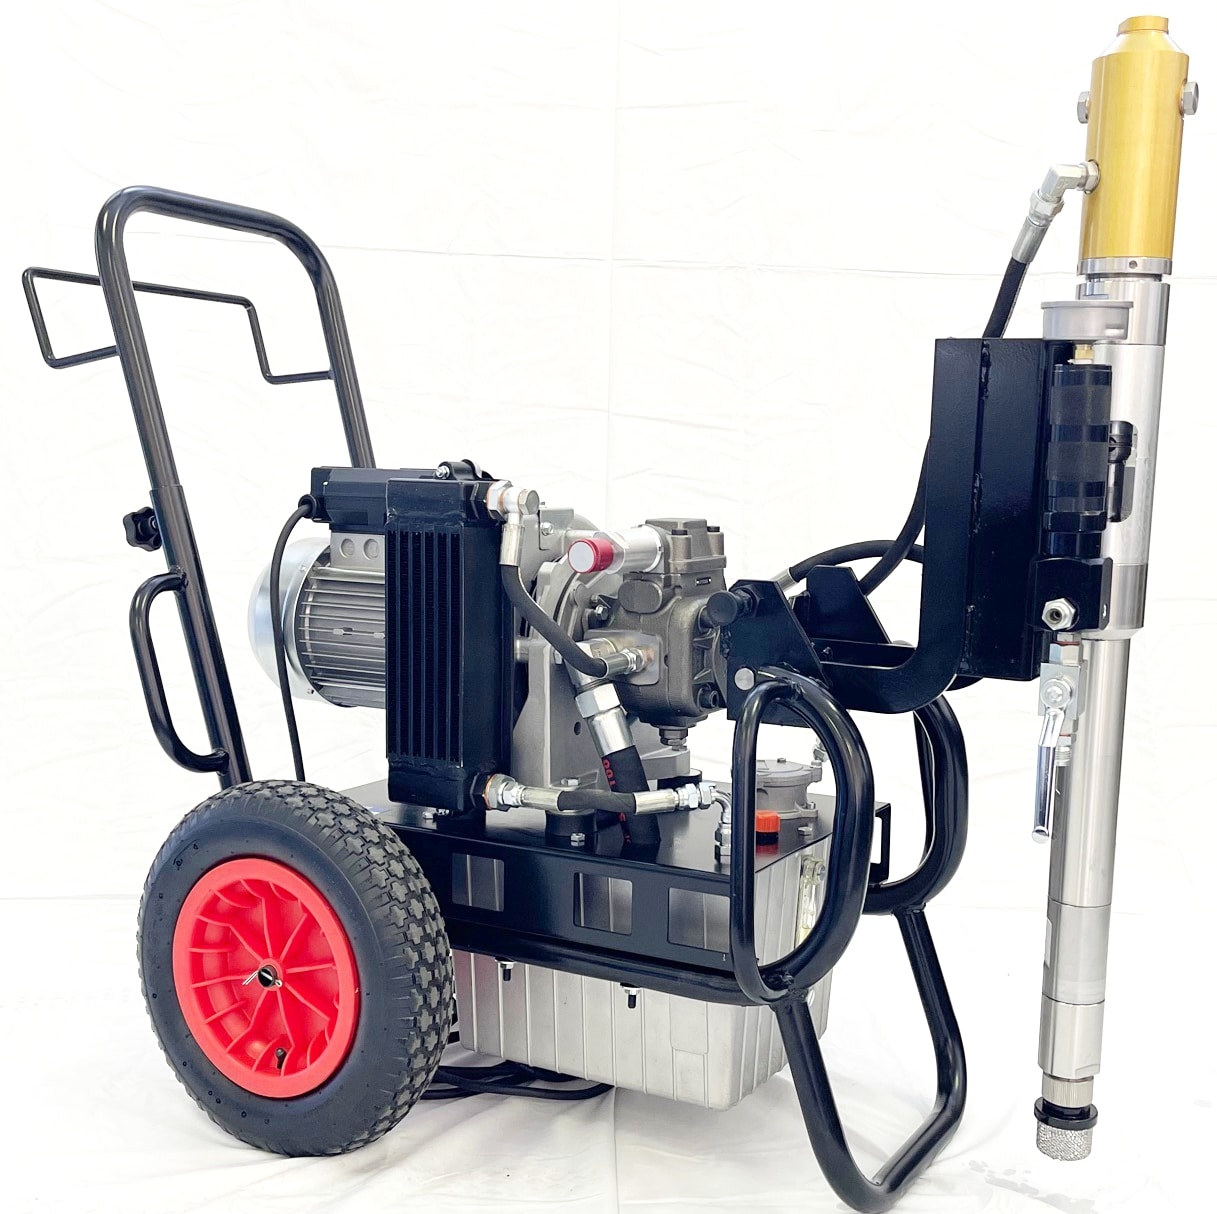 Hydra airless piston pump